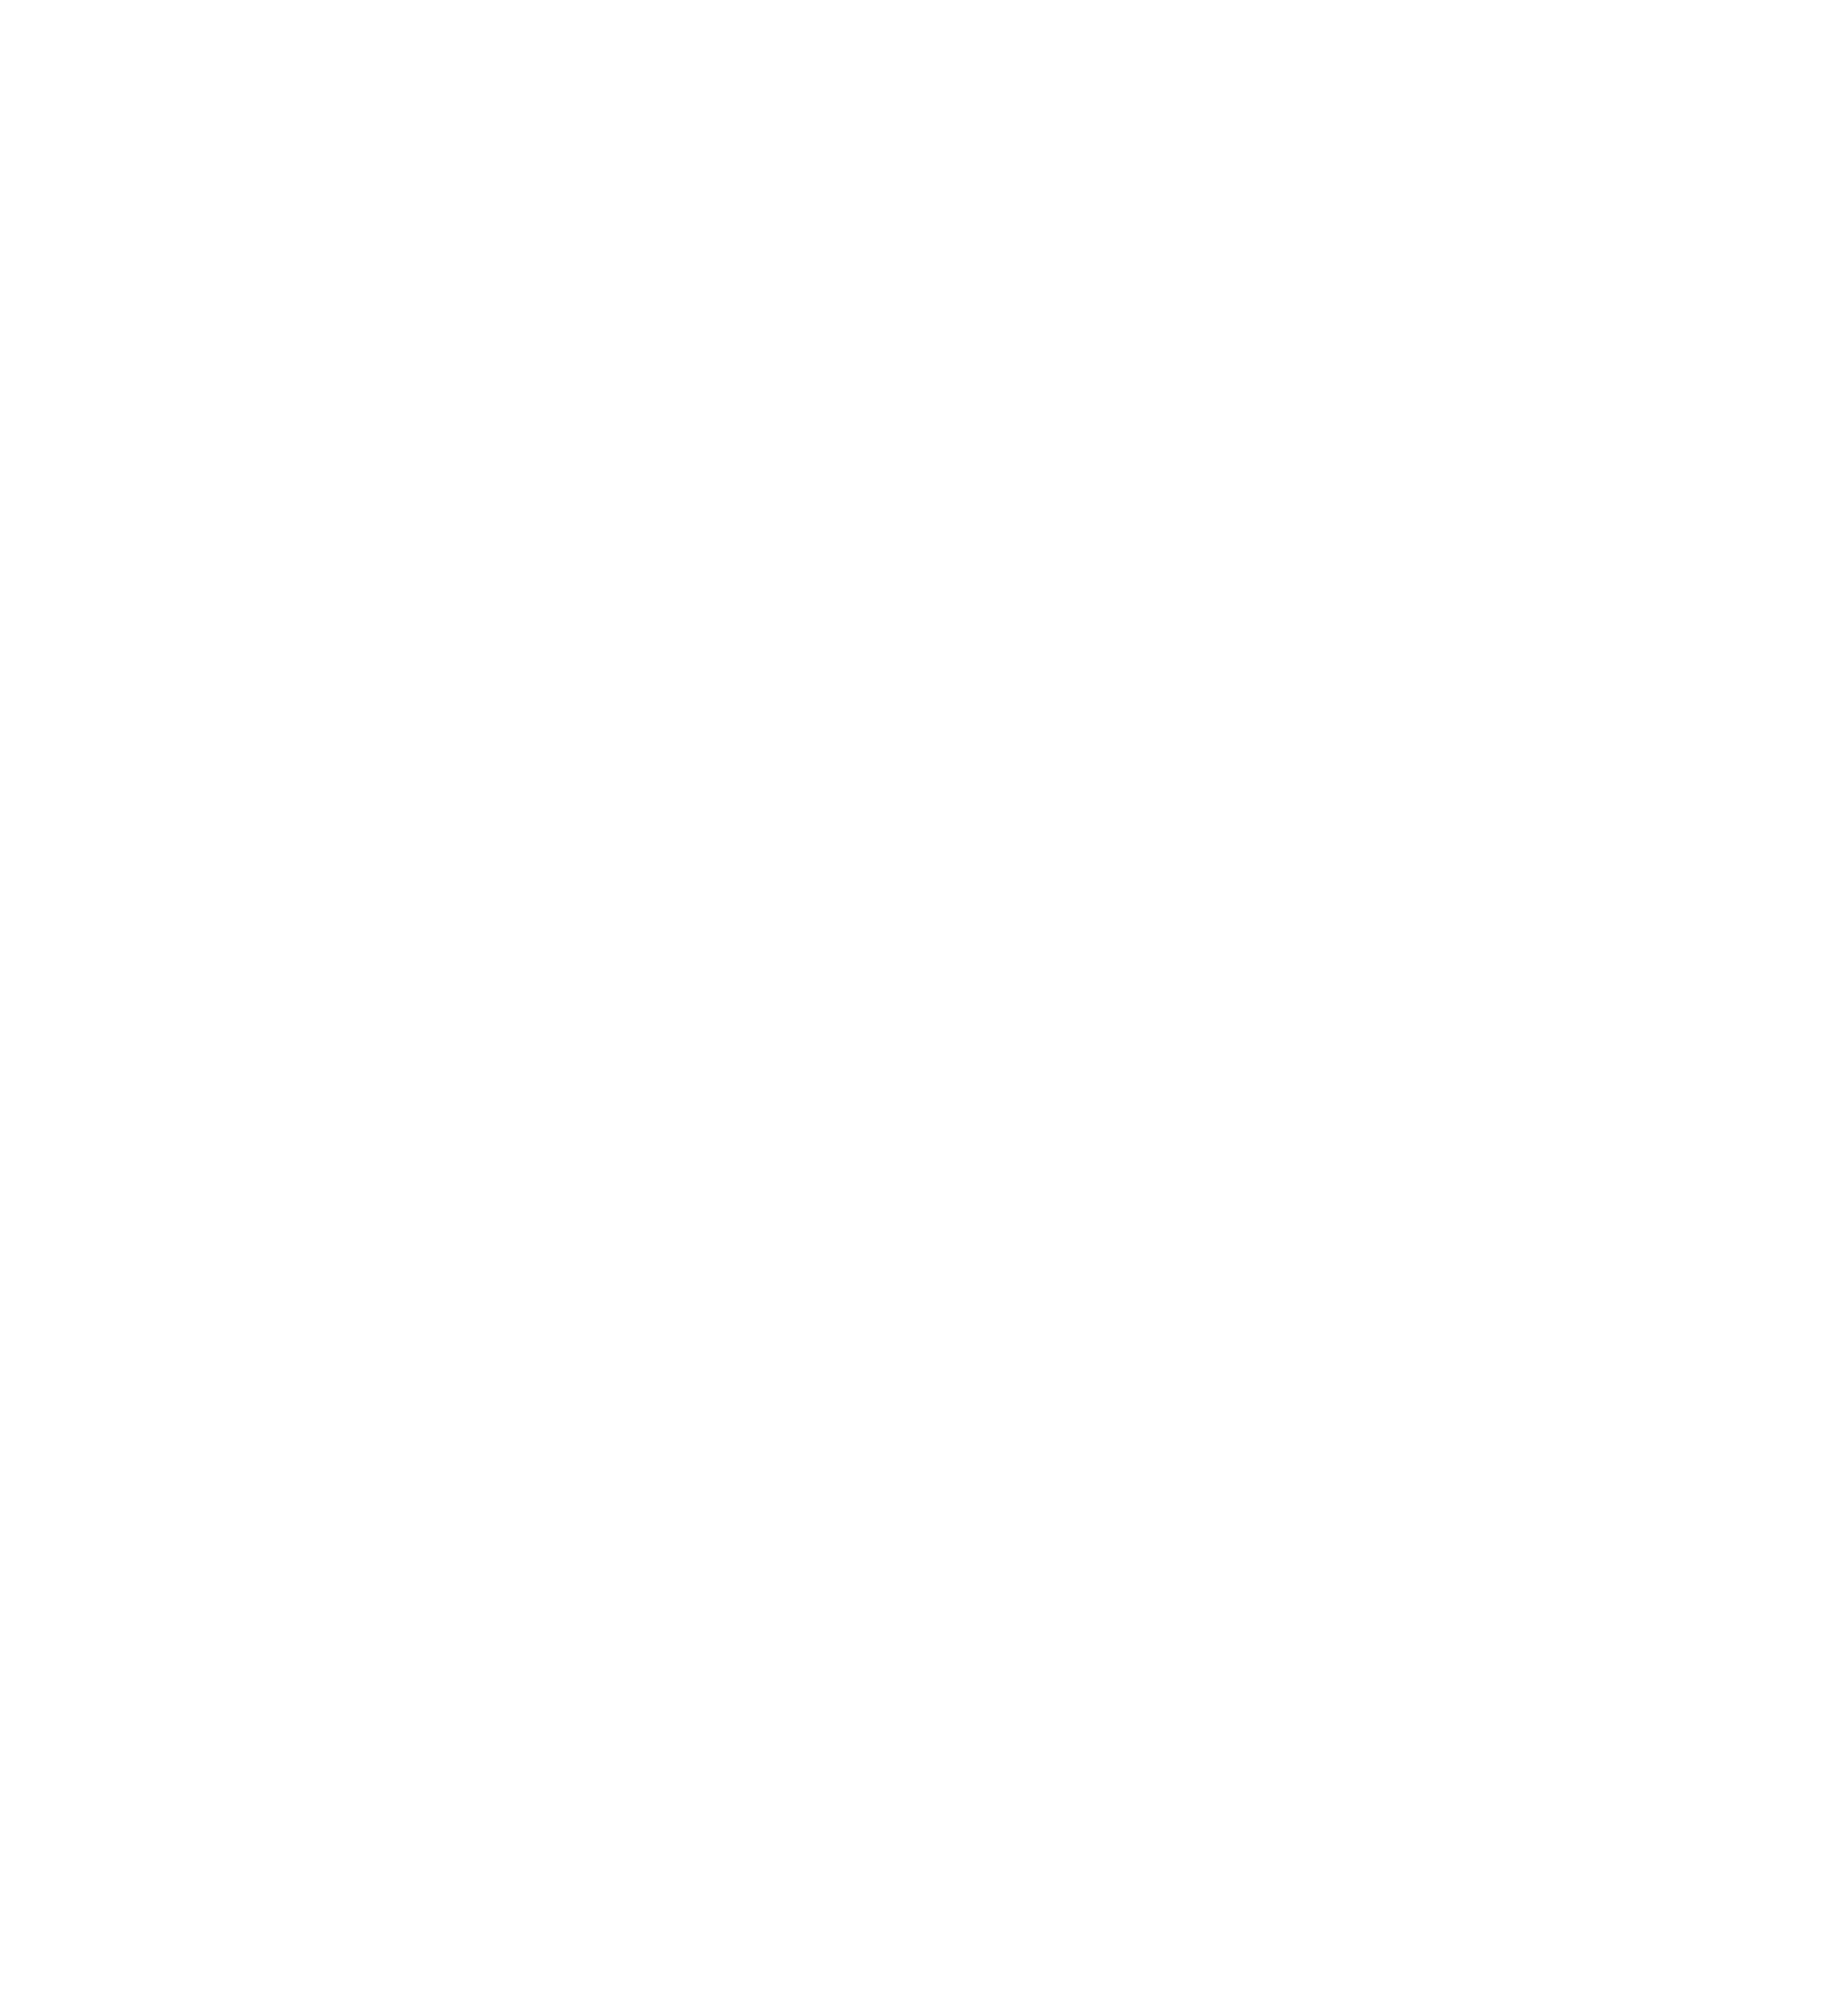 2022 Travellers' Choice award logo white